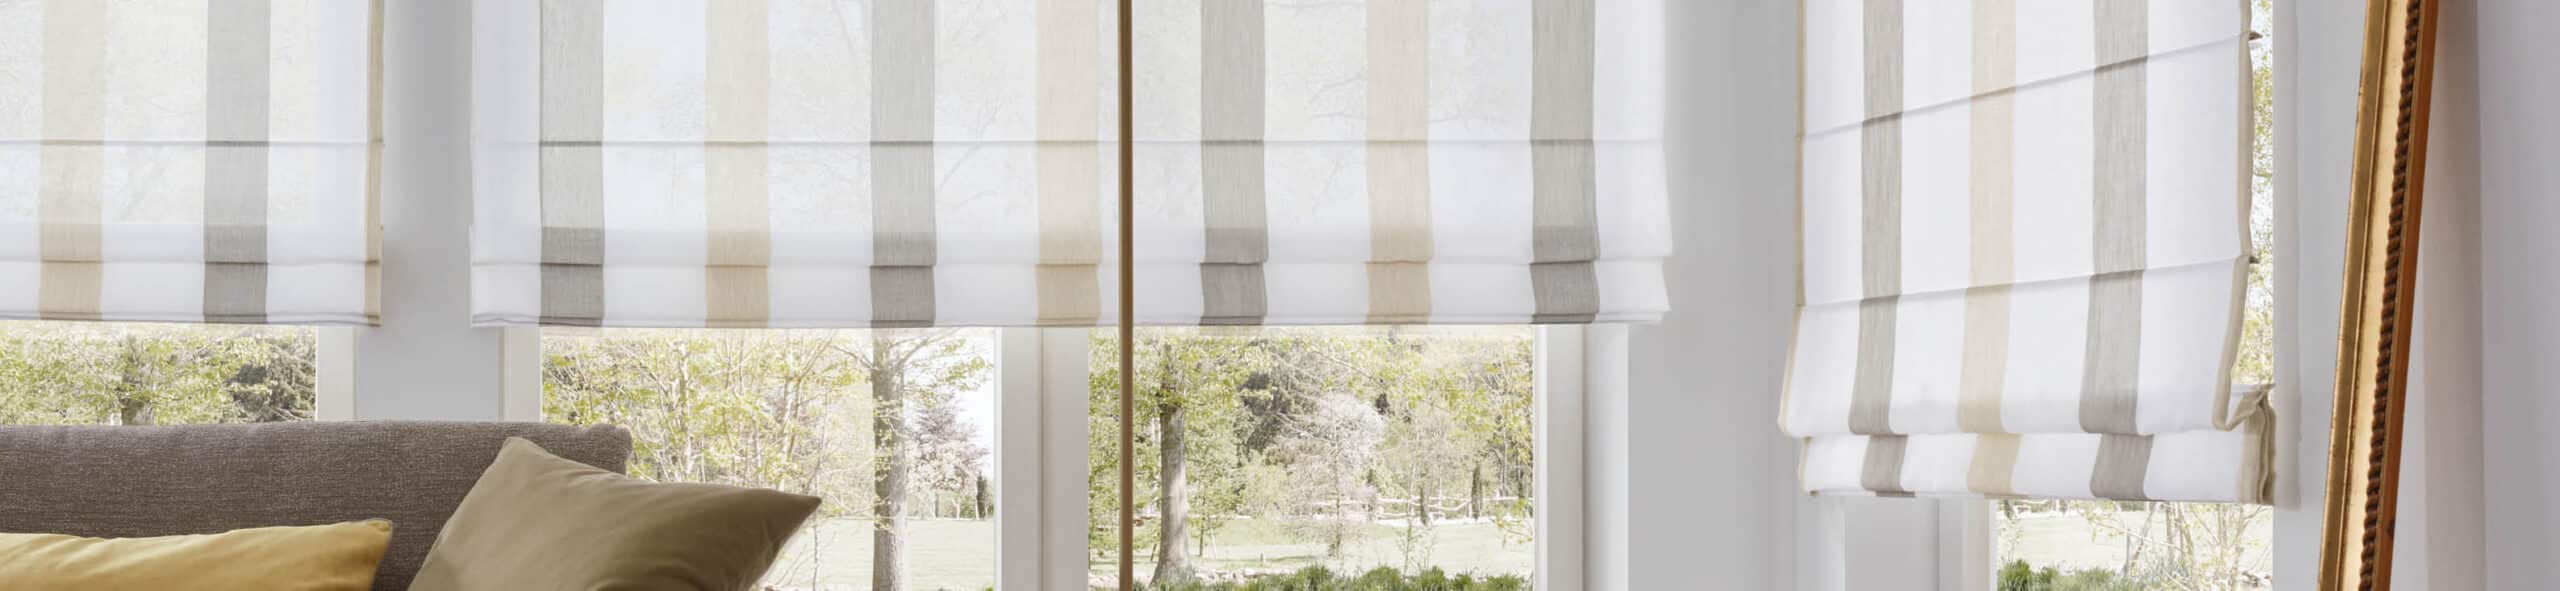 9 tipos de cortinas para ventana que debes conocer